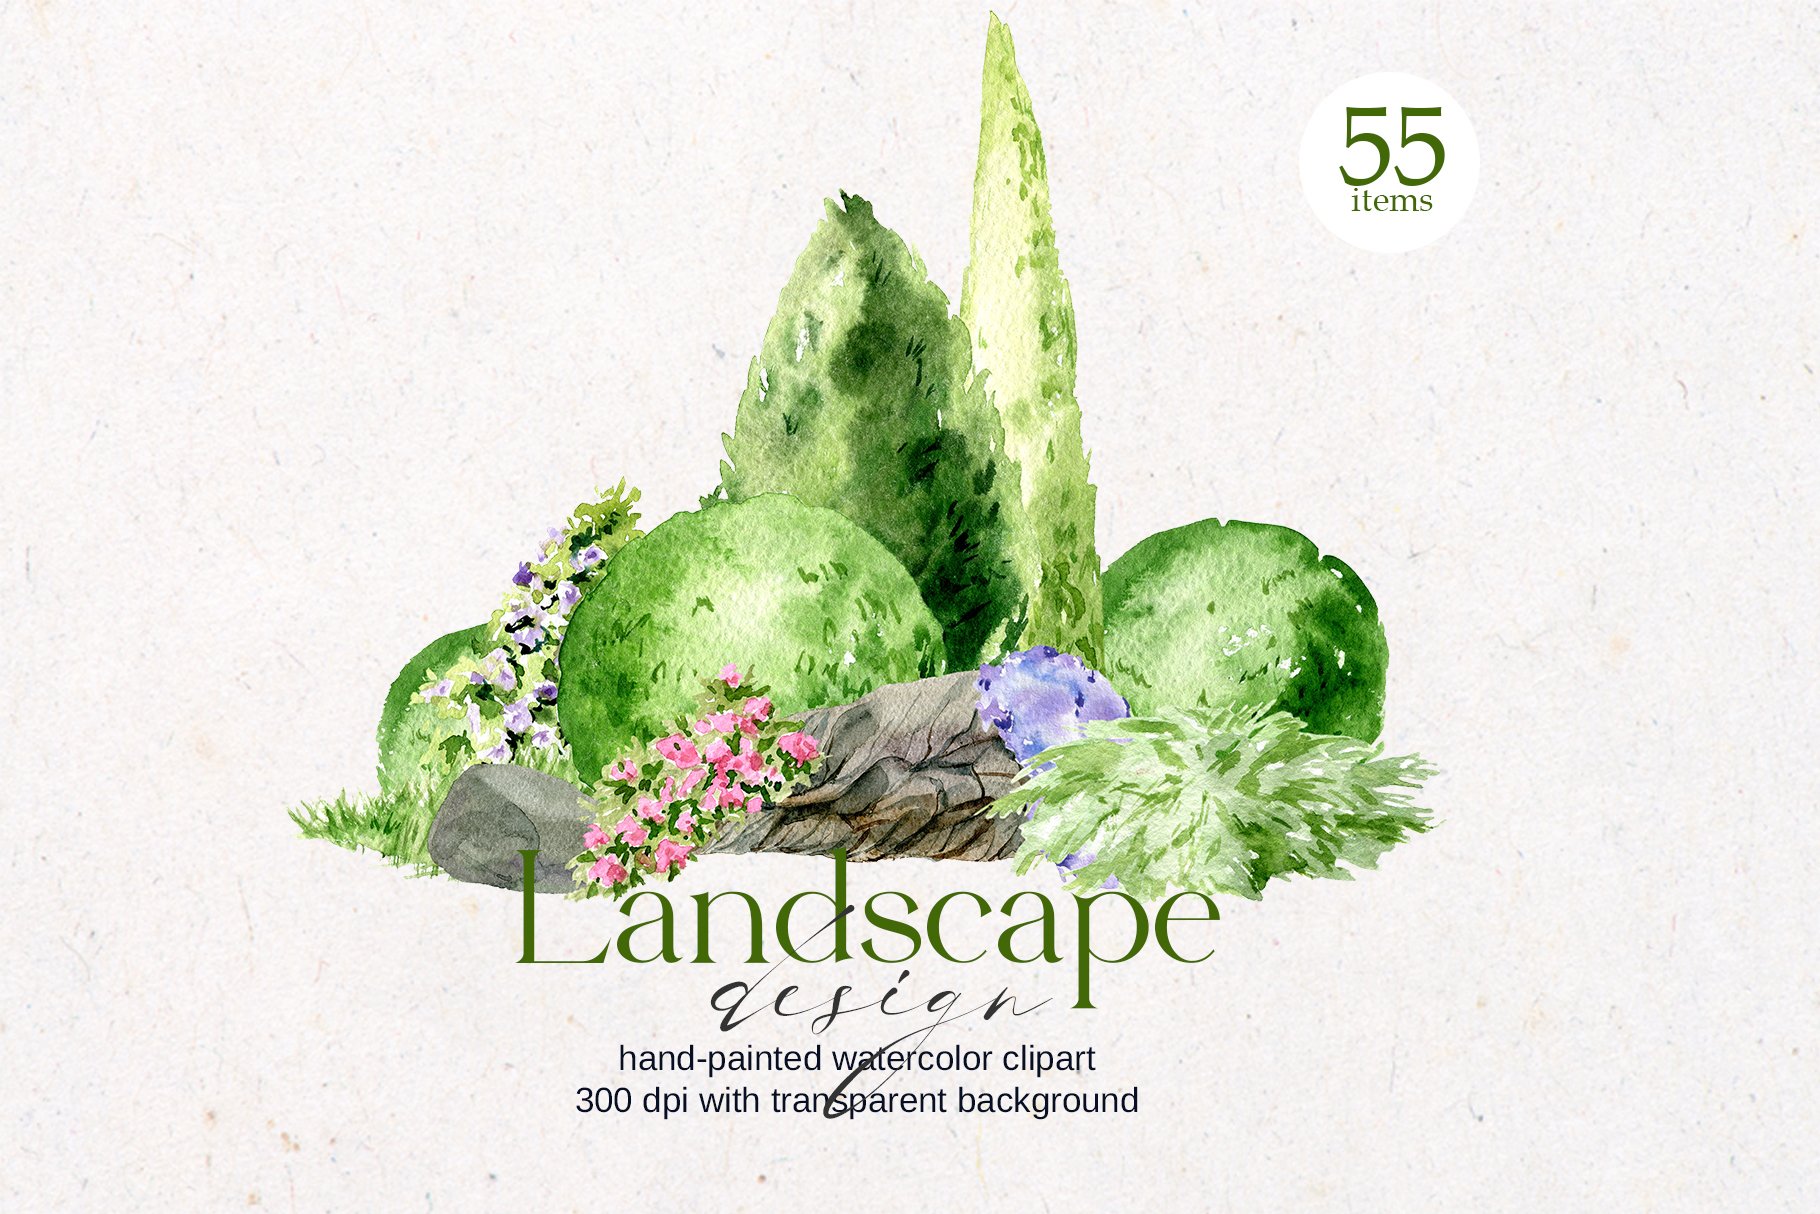 Watercolor Landscape design cover image.